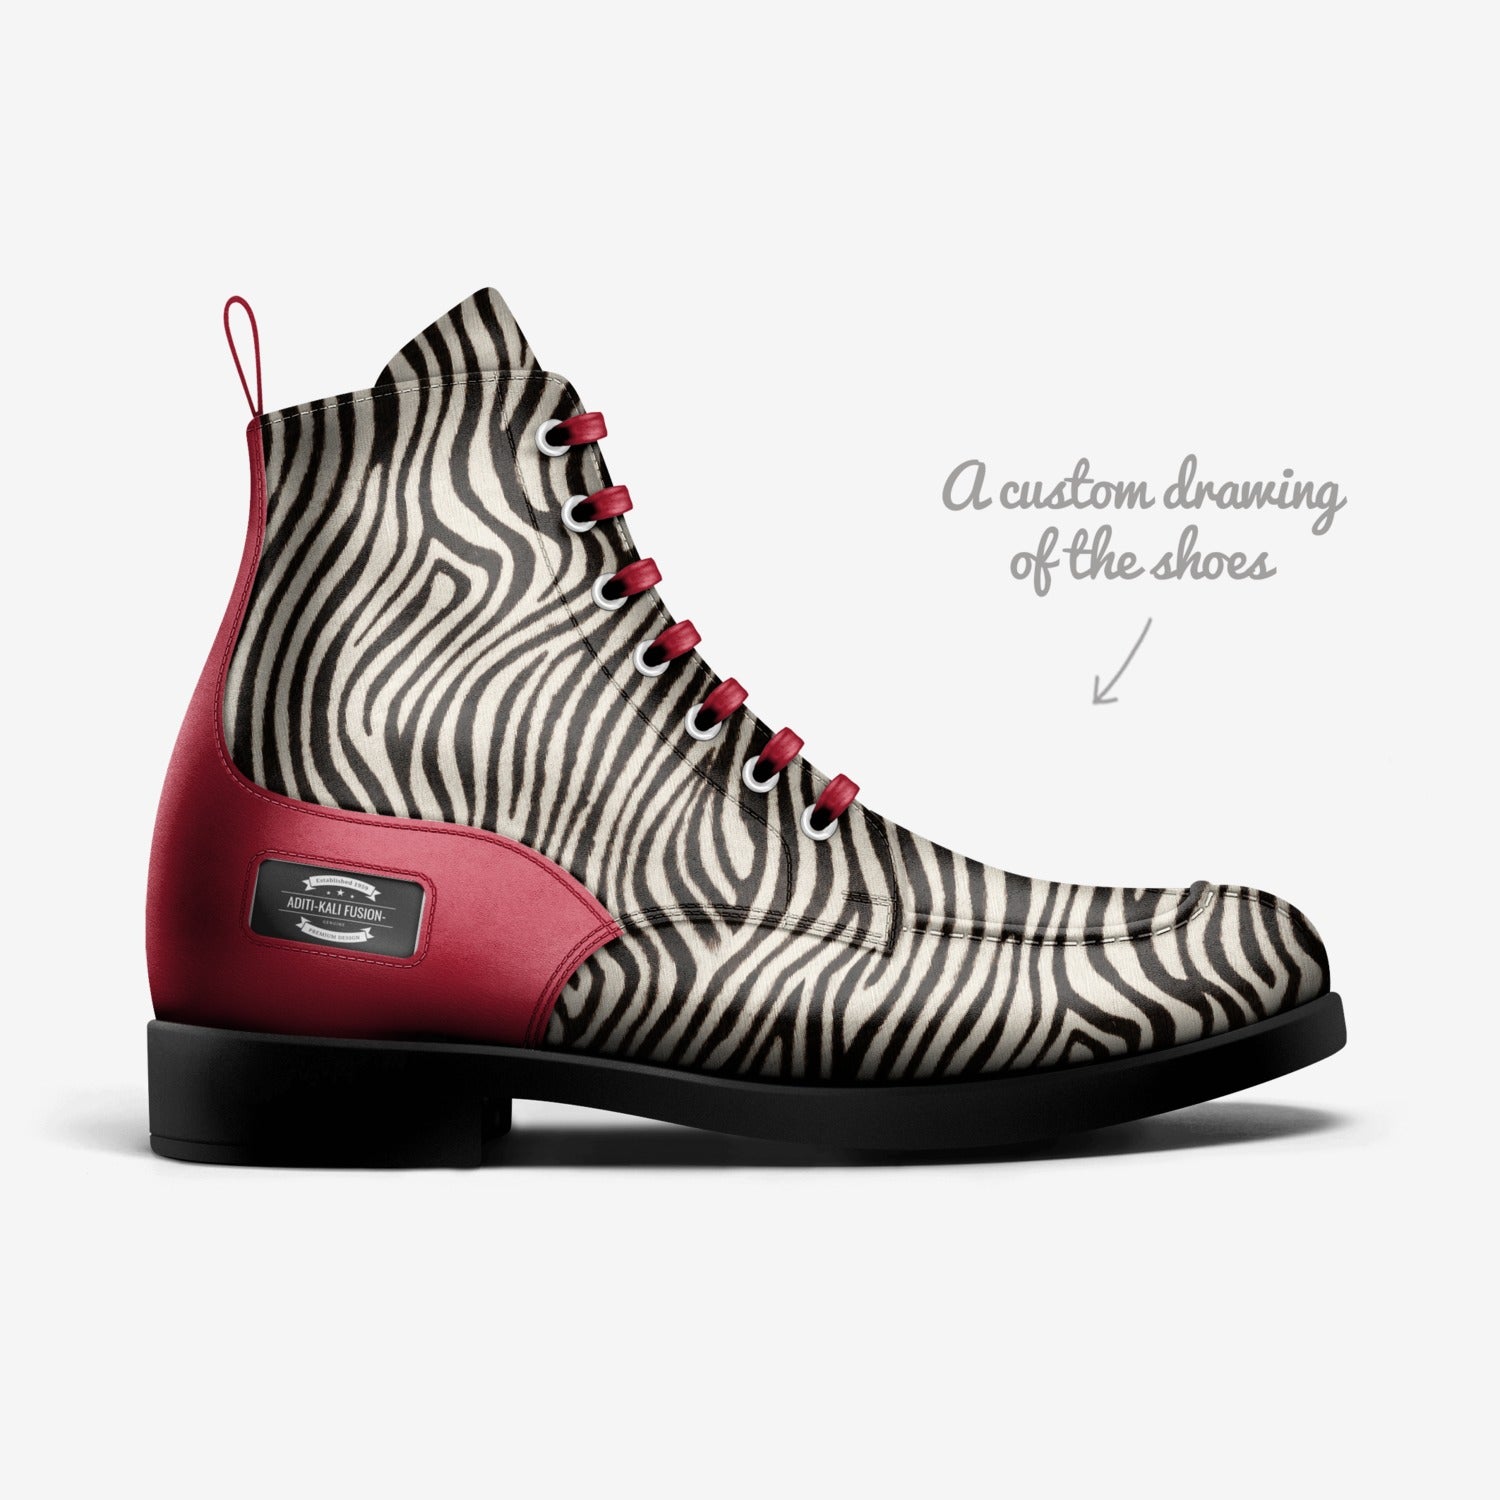 aditi-kali fusions-elegant biker boot-red/black/zebra Wonkey Donkey Bazaar